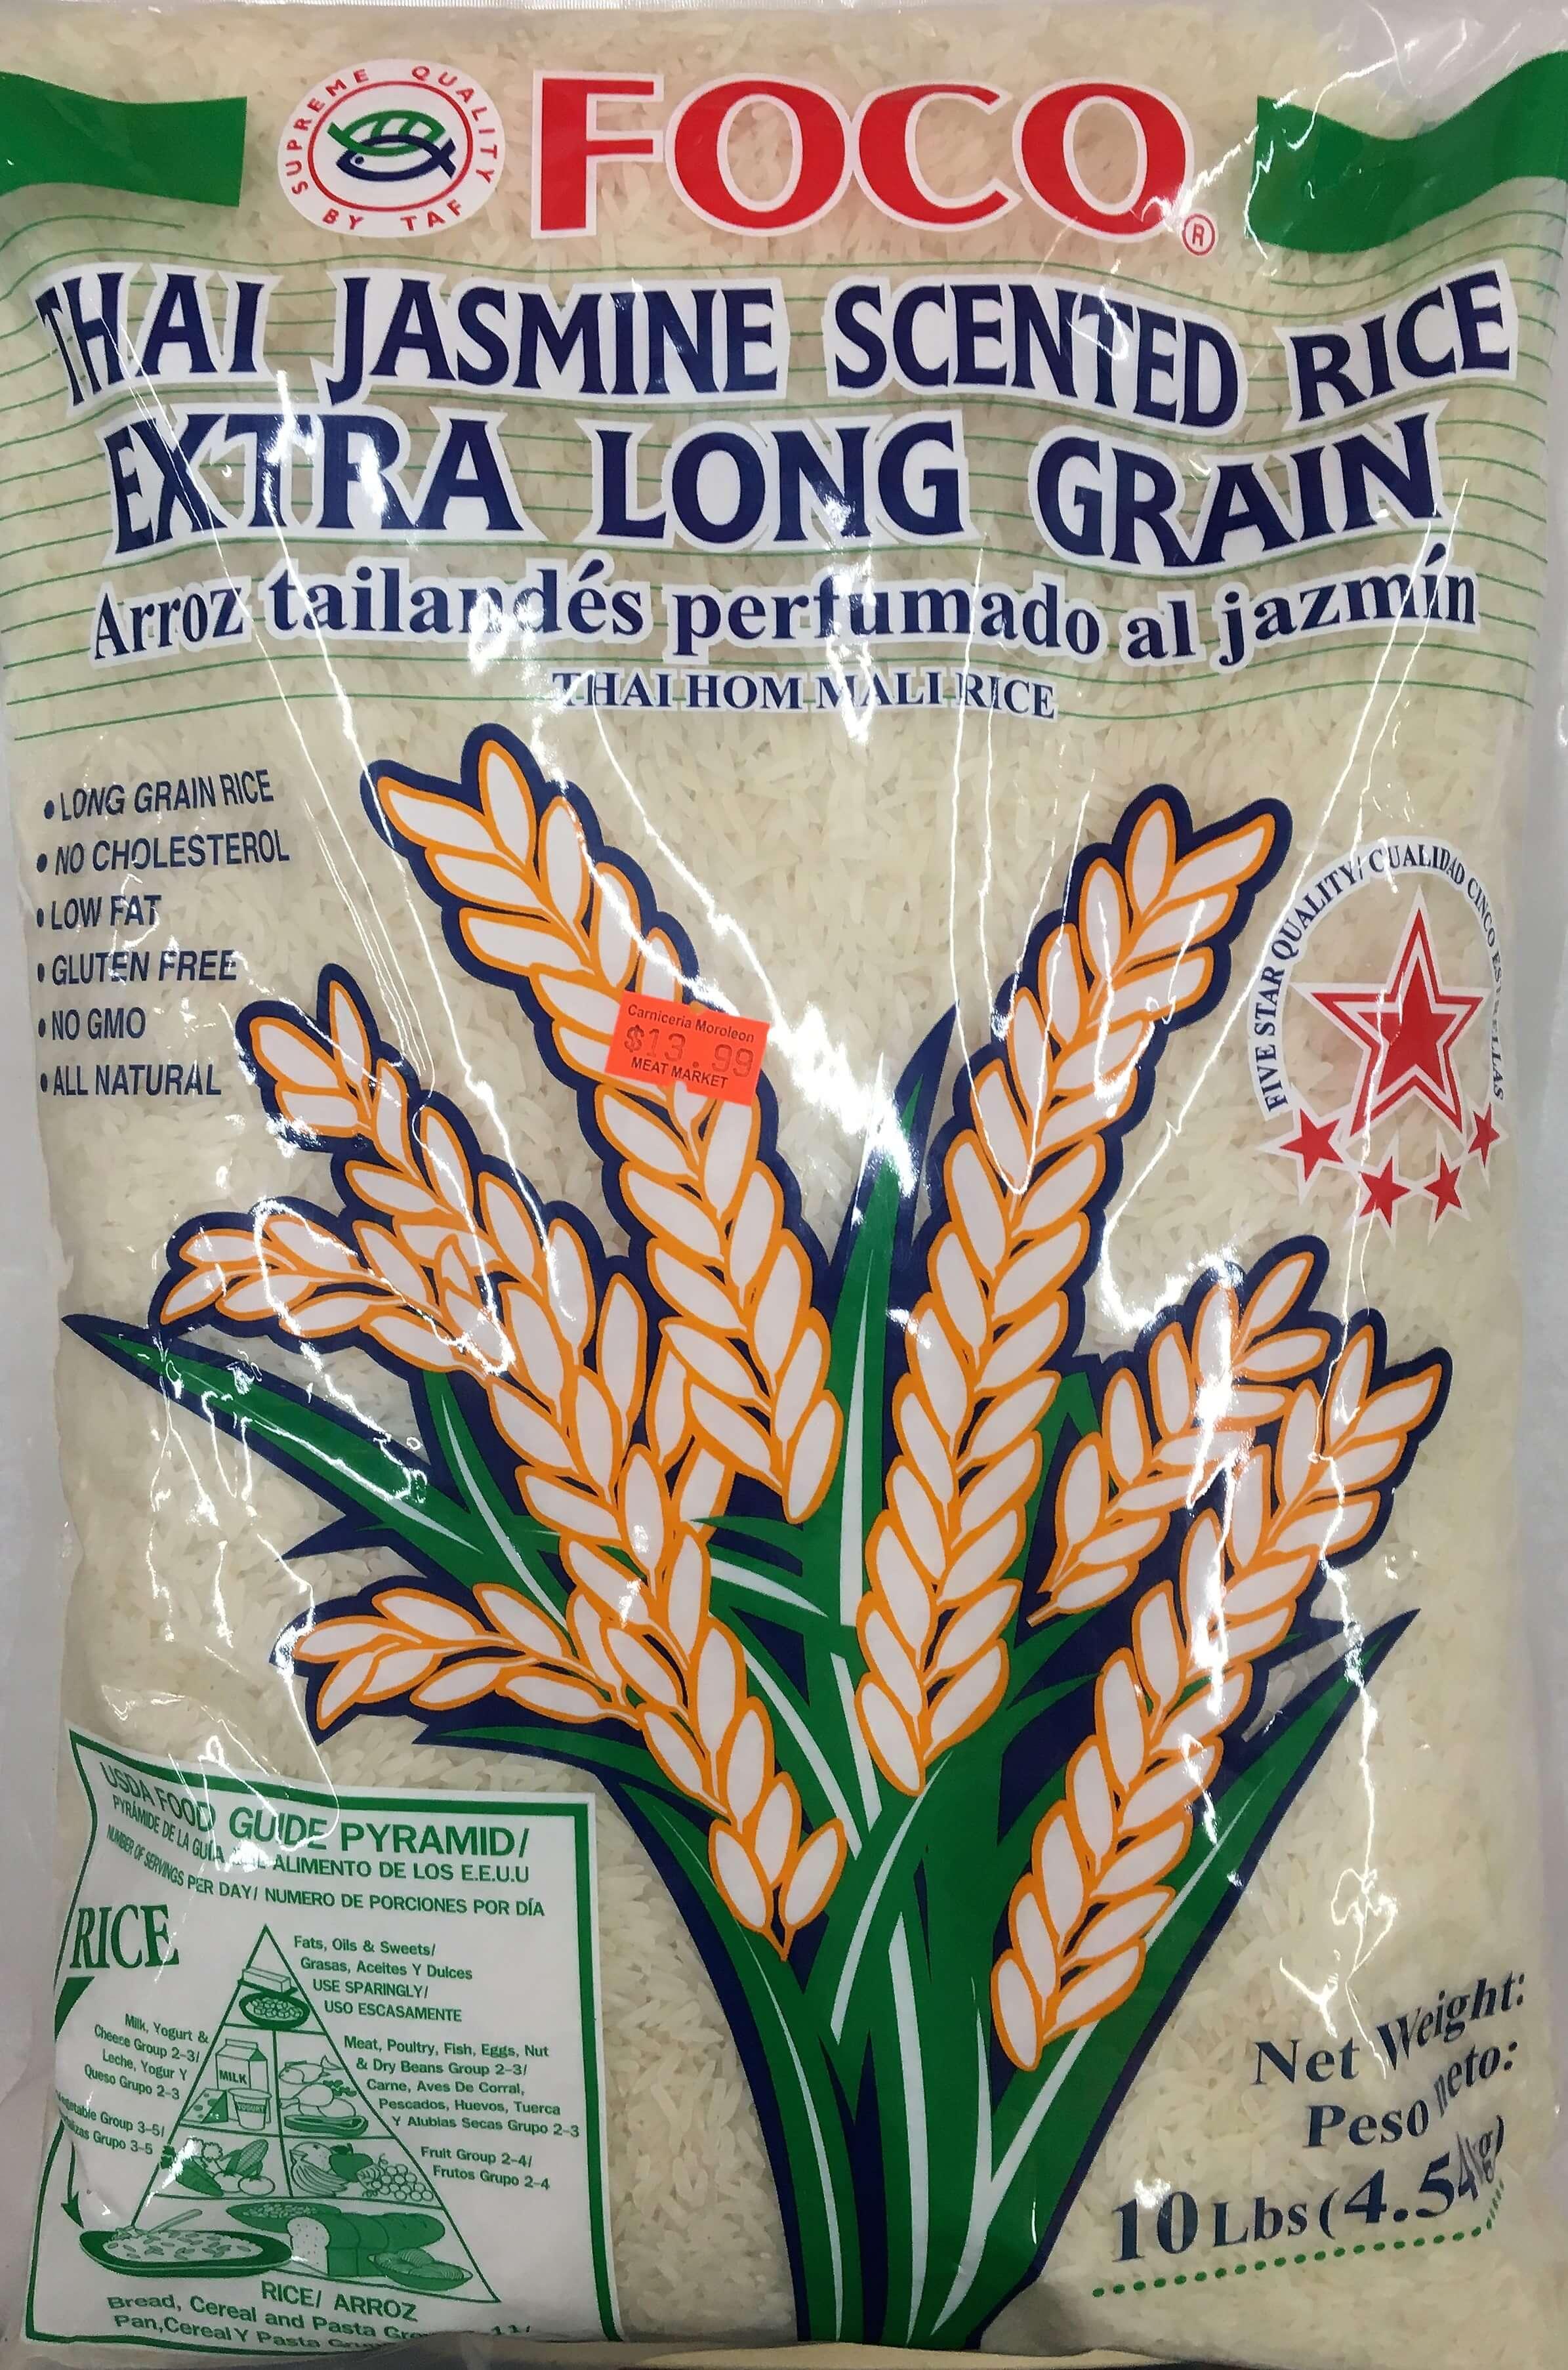 Foco - Thai Jasmine Scented Rice Extra Long Grain 10Lbs.